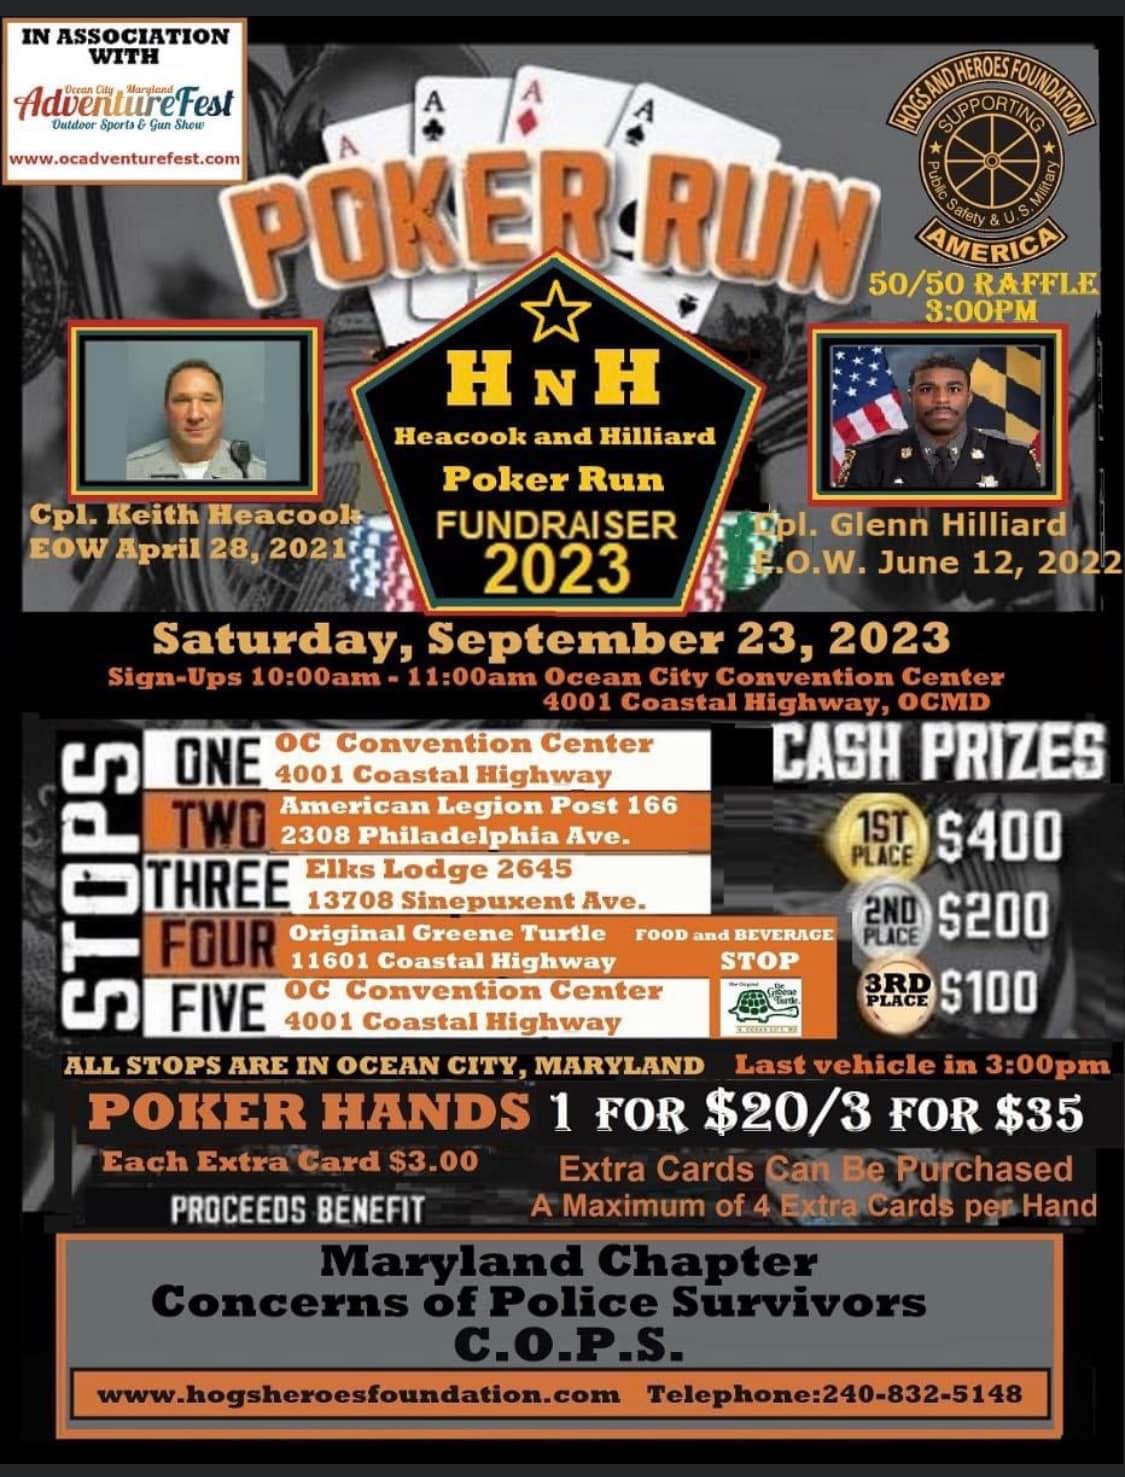 Poker Run informational flyer